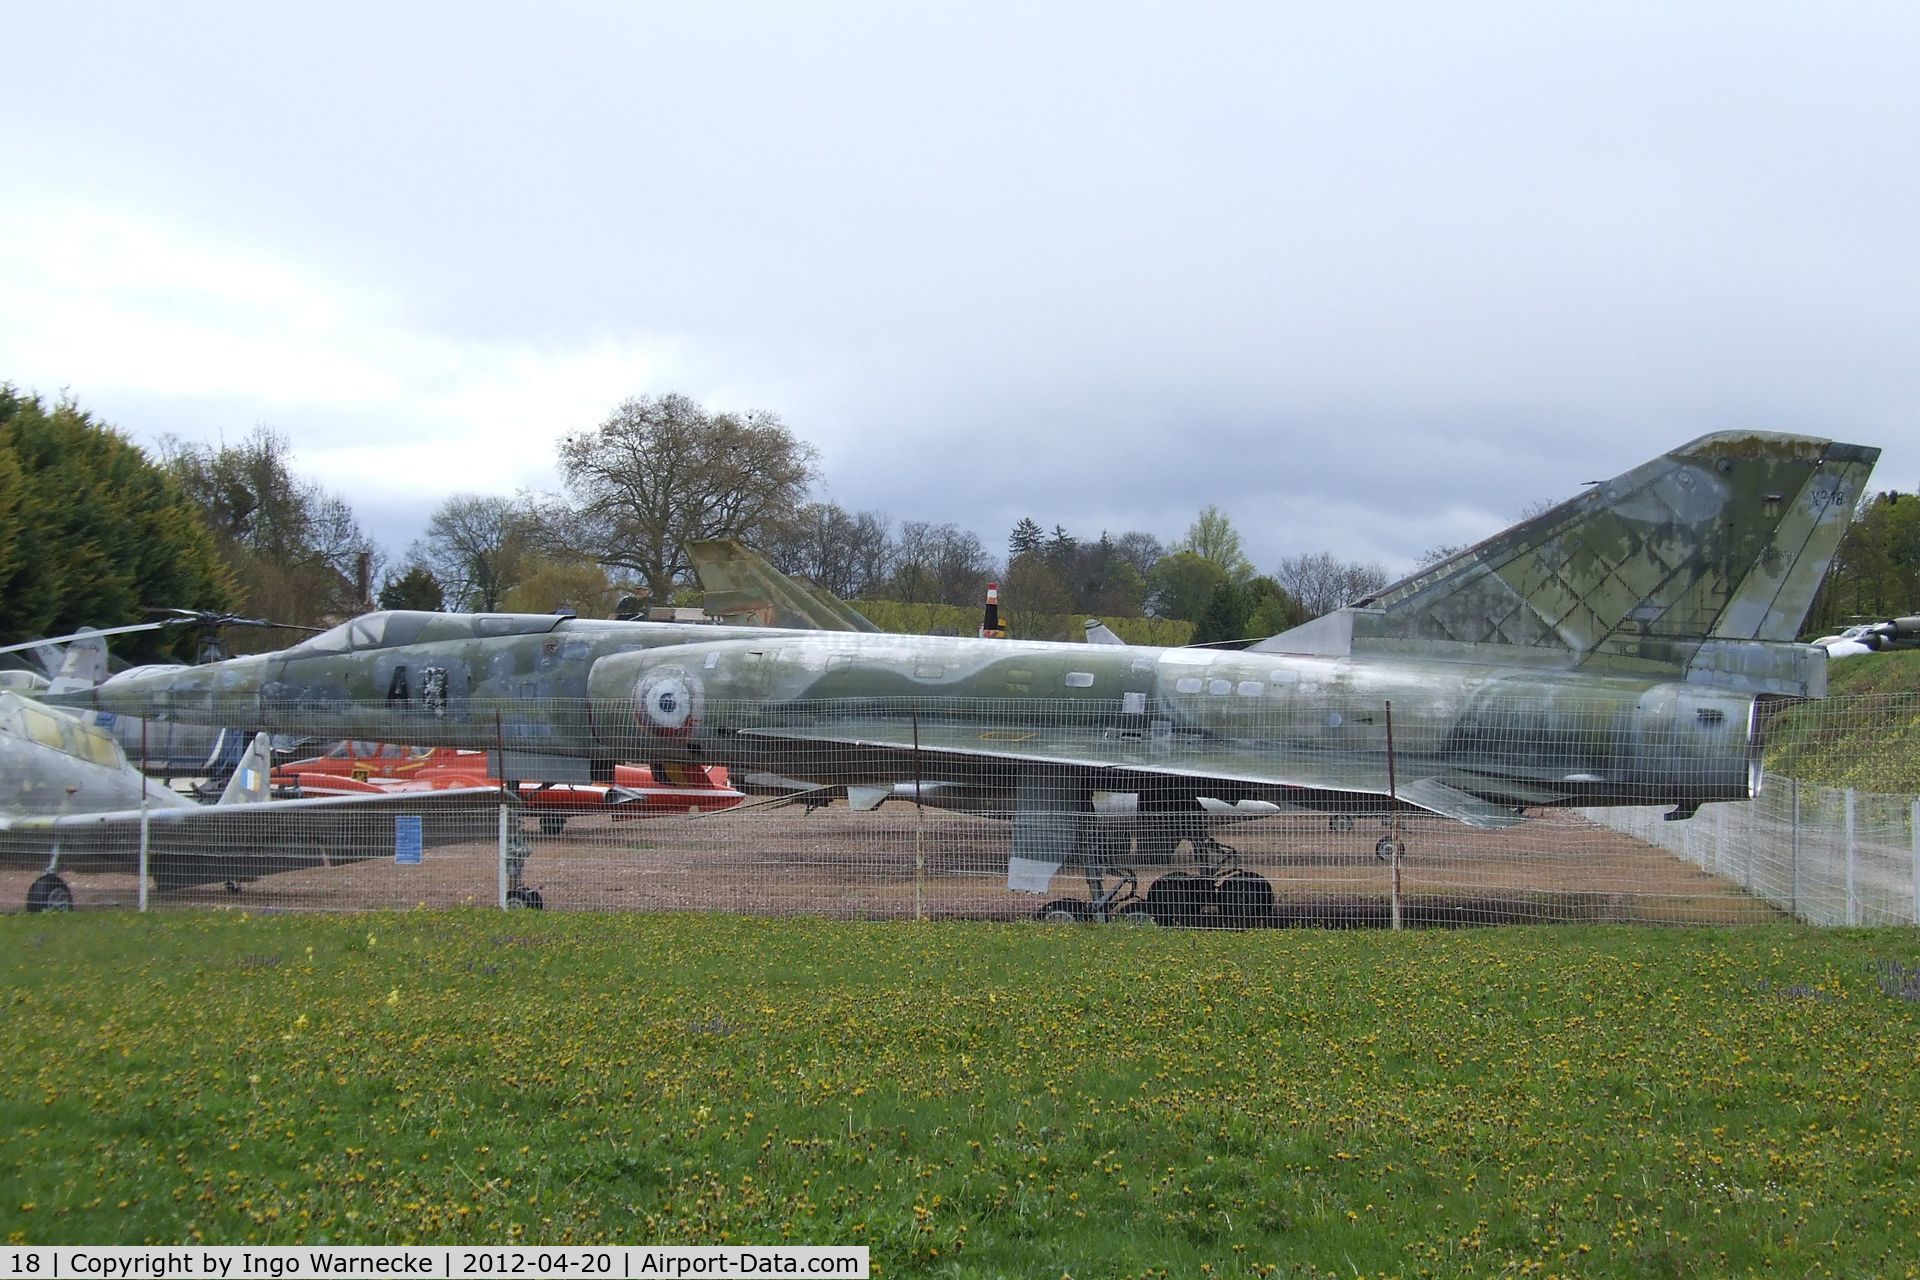 18, Dassault Mirage IVA C/N 18, Dassault Mirage IV A at the Musee de l'Aviation du Chateau, Savigny-les-Beaune